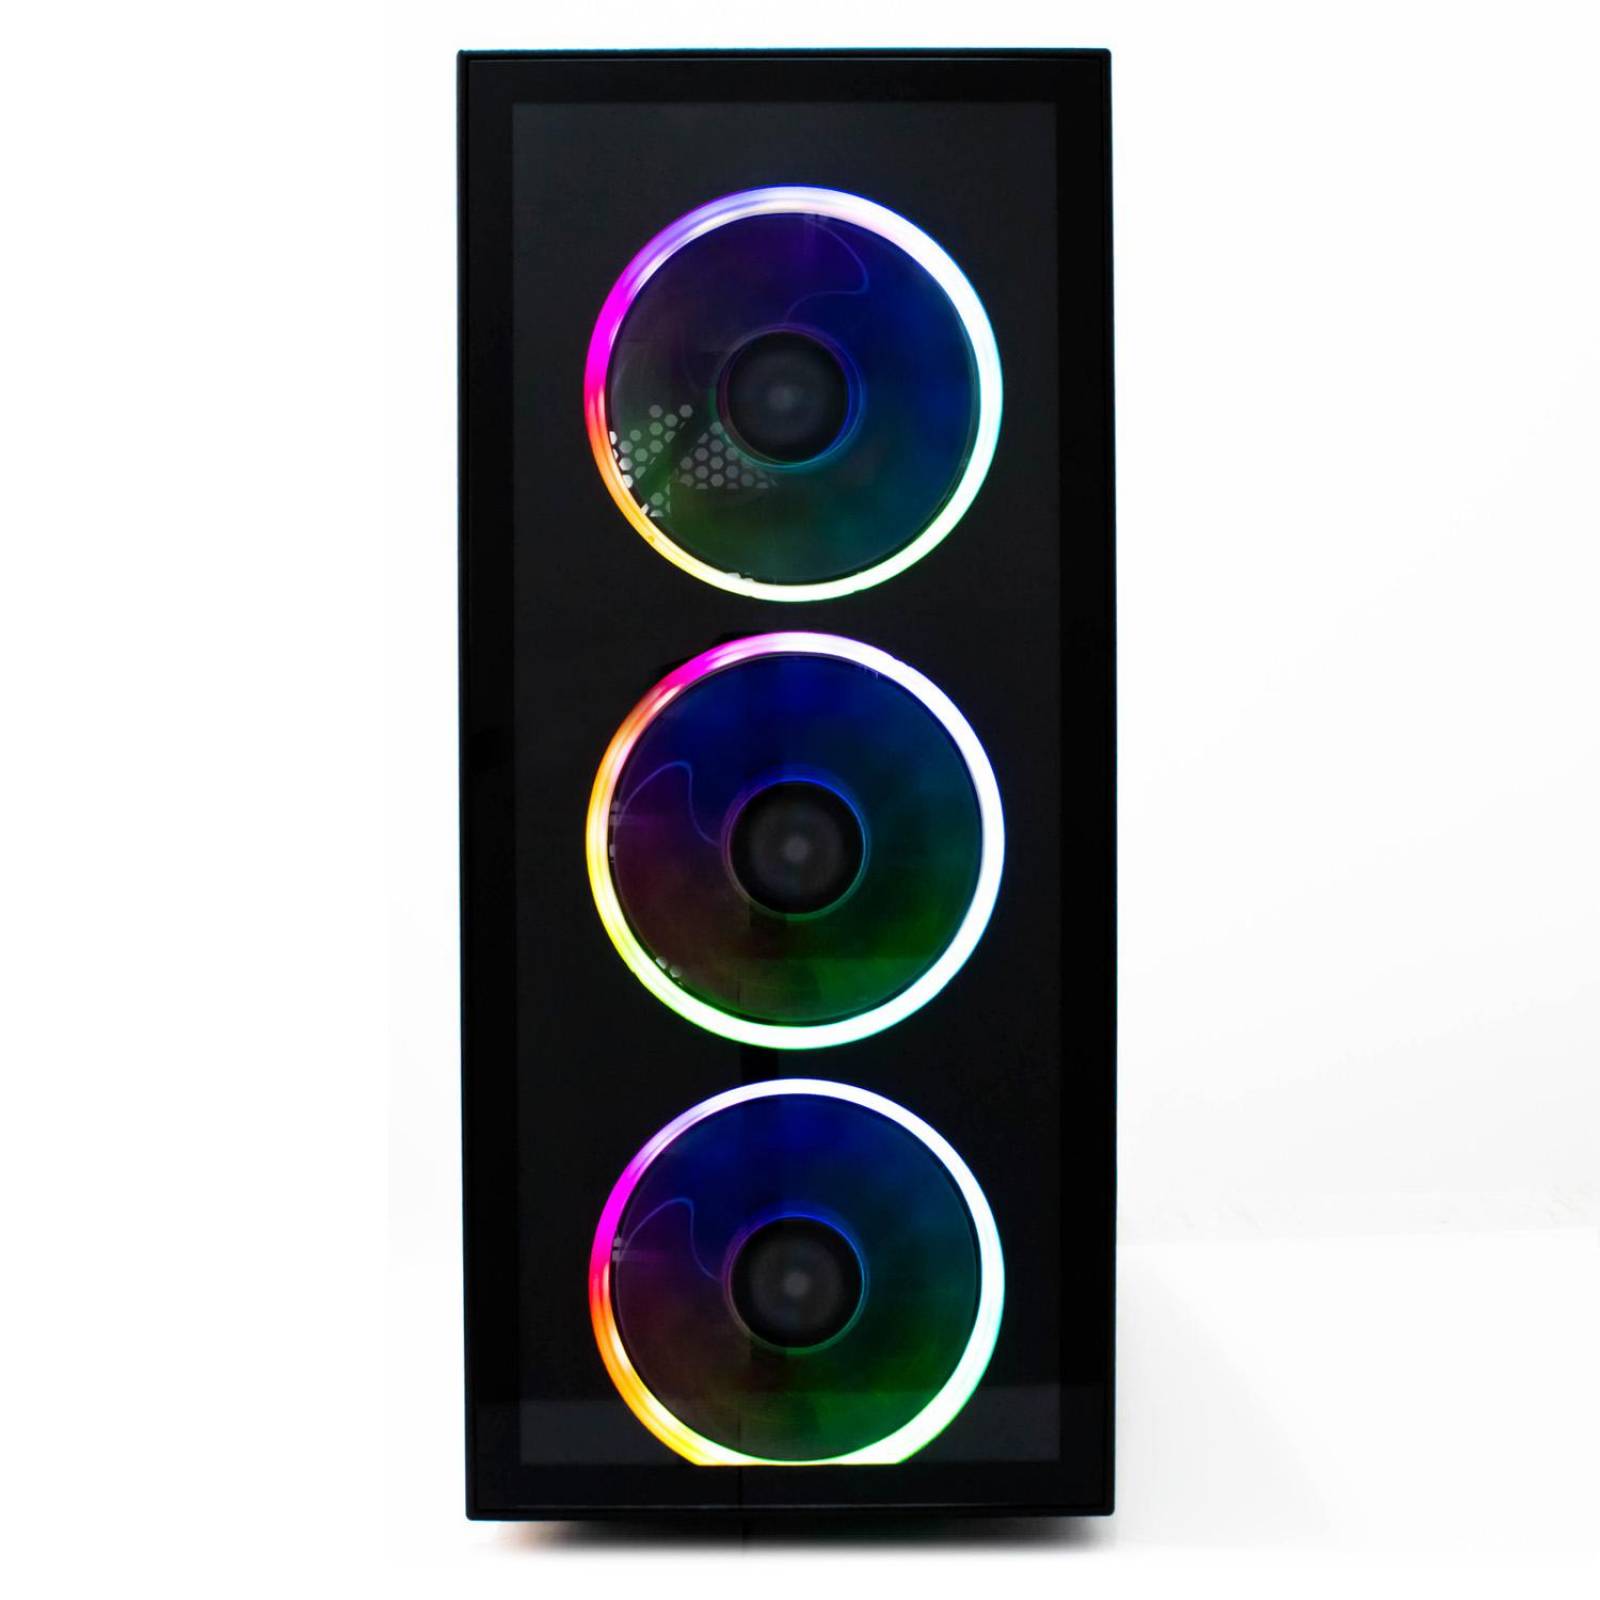 Xtreme PC Gamer AMD Radeon Vega 11 Ryzen 5 3400G 8GB SSD Monitor 23.8 WIFI 